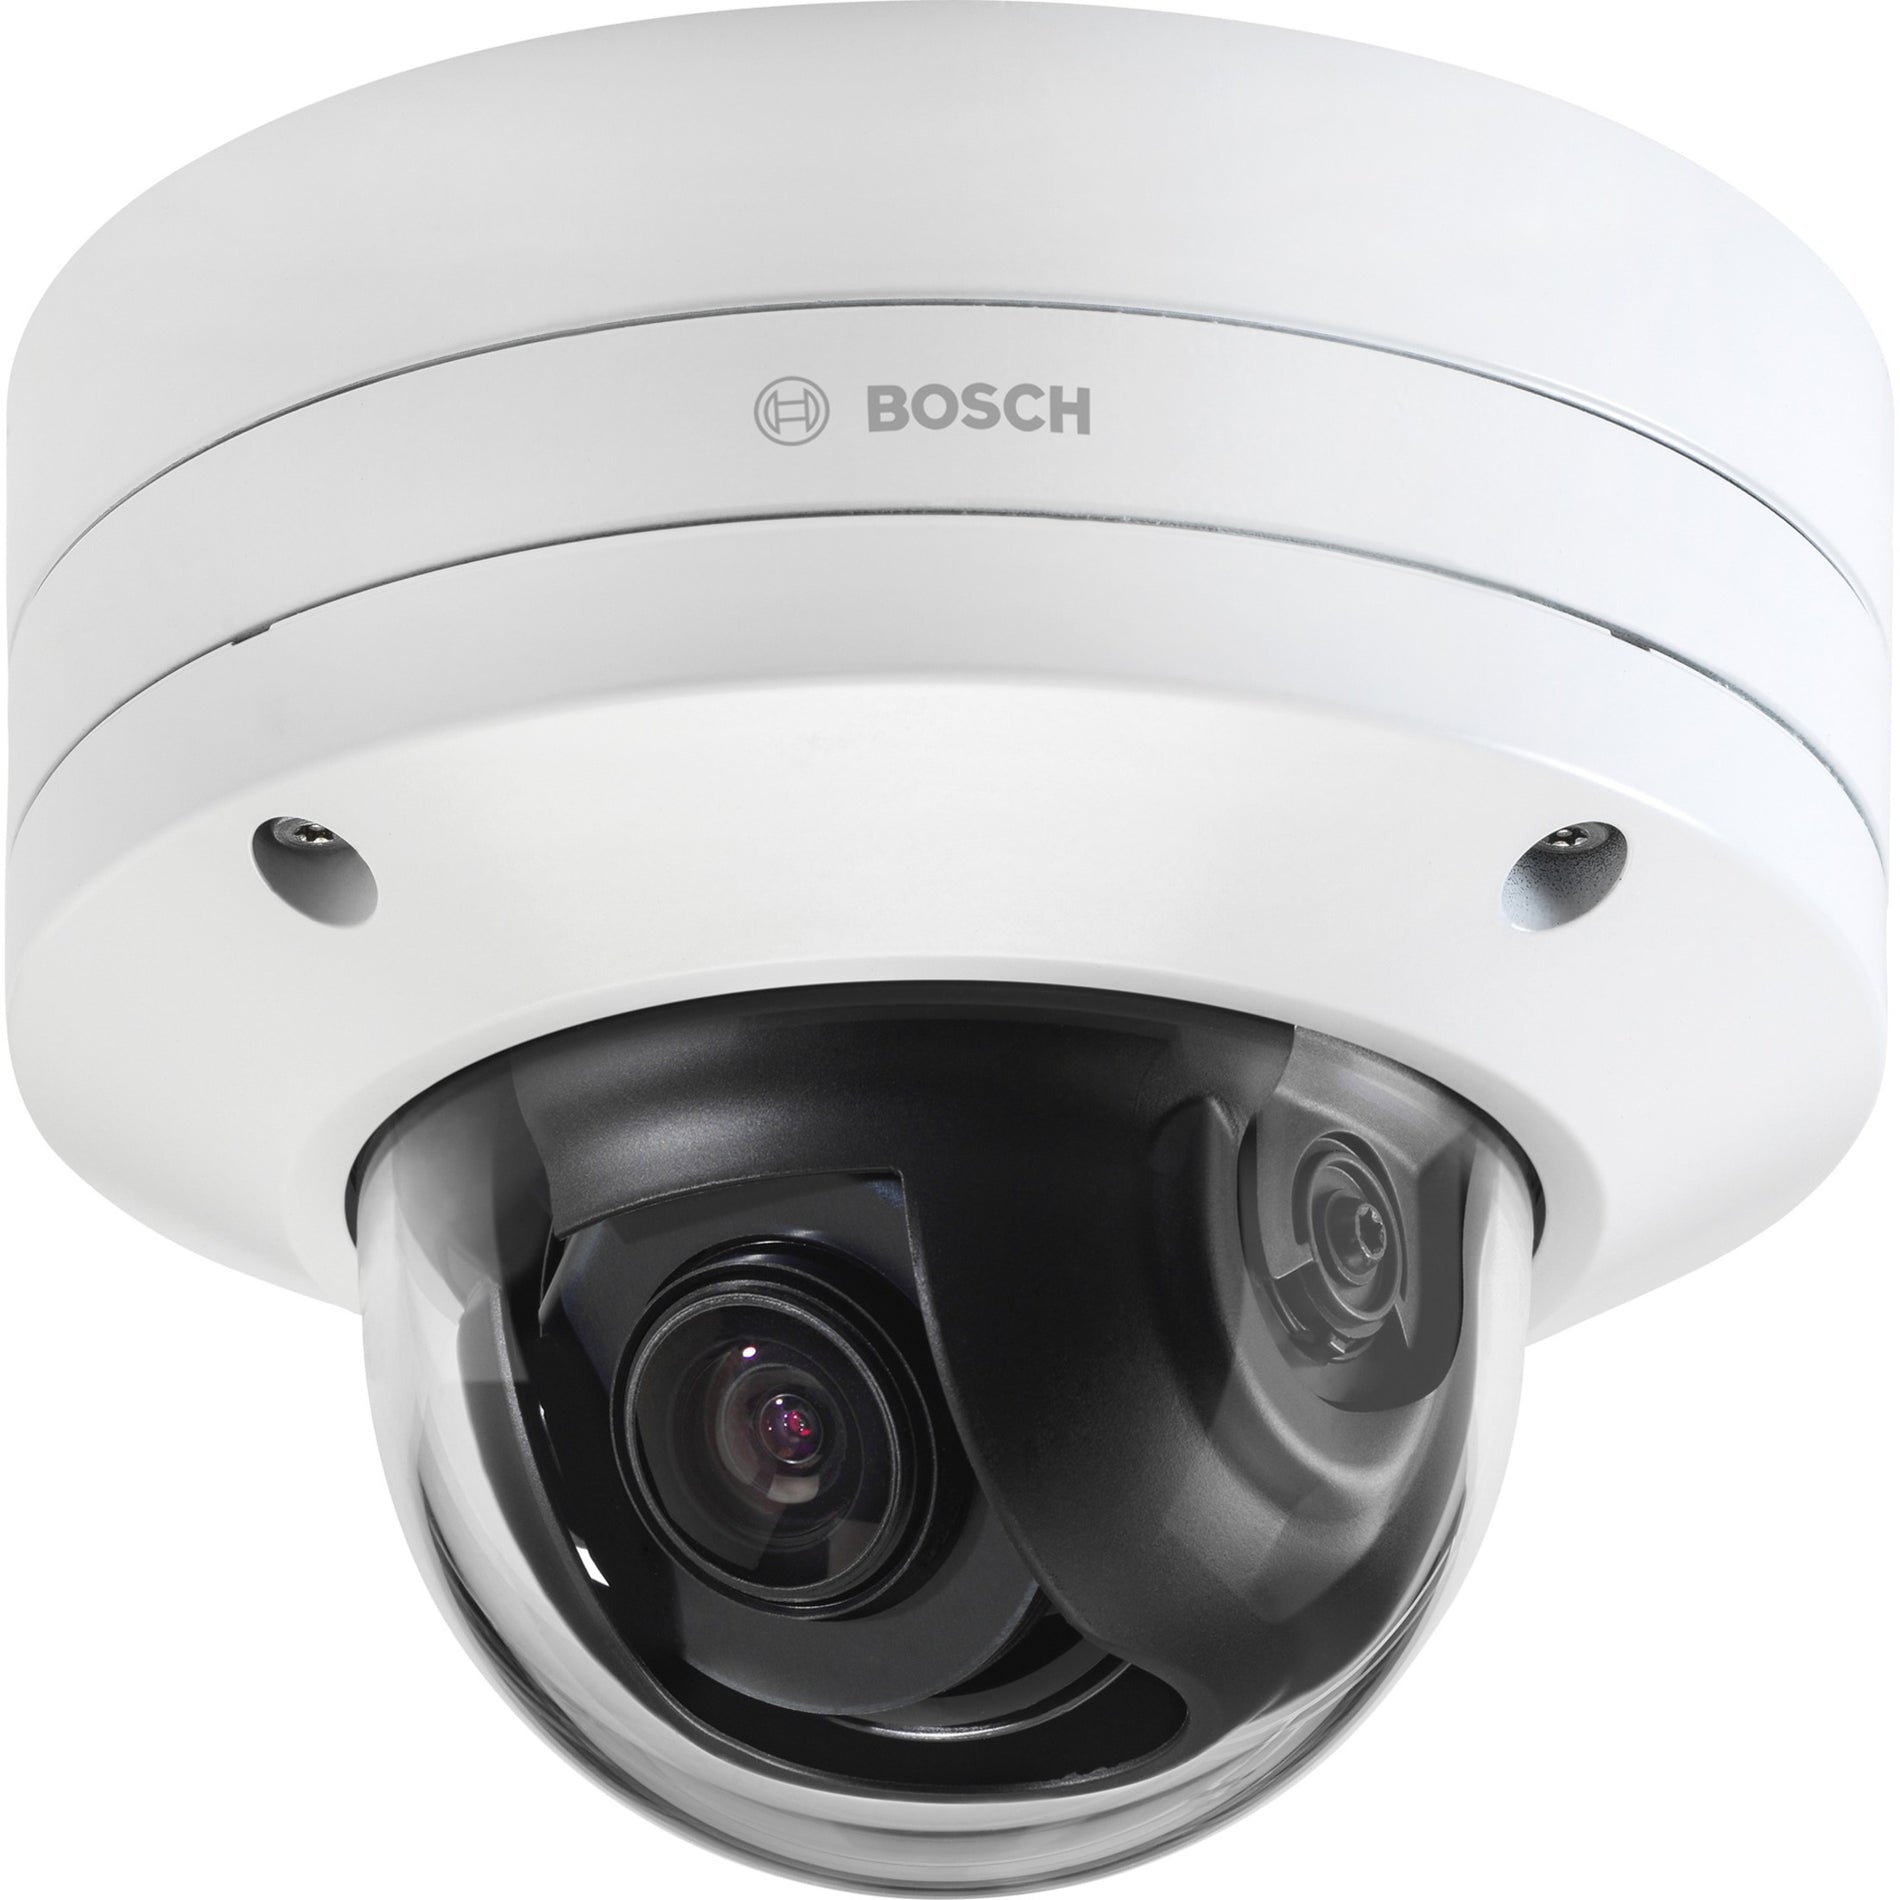 Bosch FLEXIDOME IP 8000i Network Camera - 8MP HDR 3.9-10MM PTRZ IP66 [Discontinued]